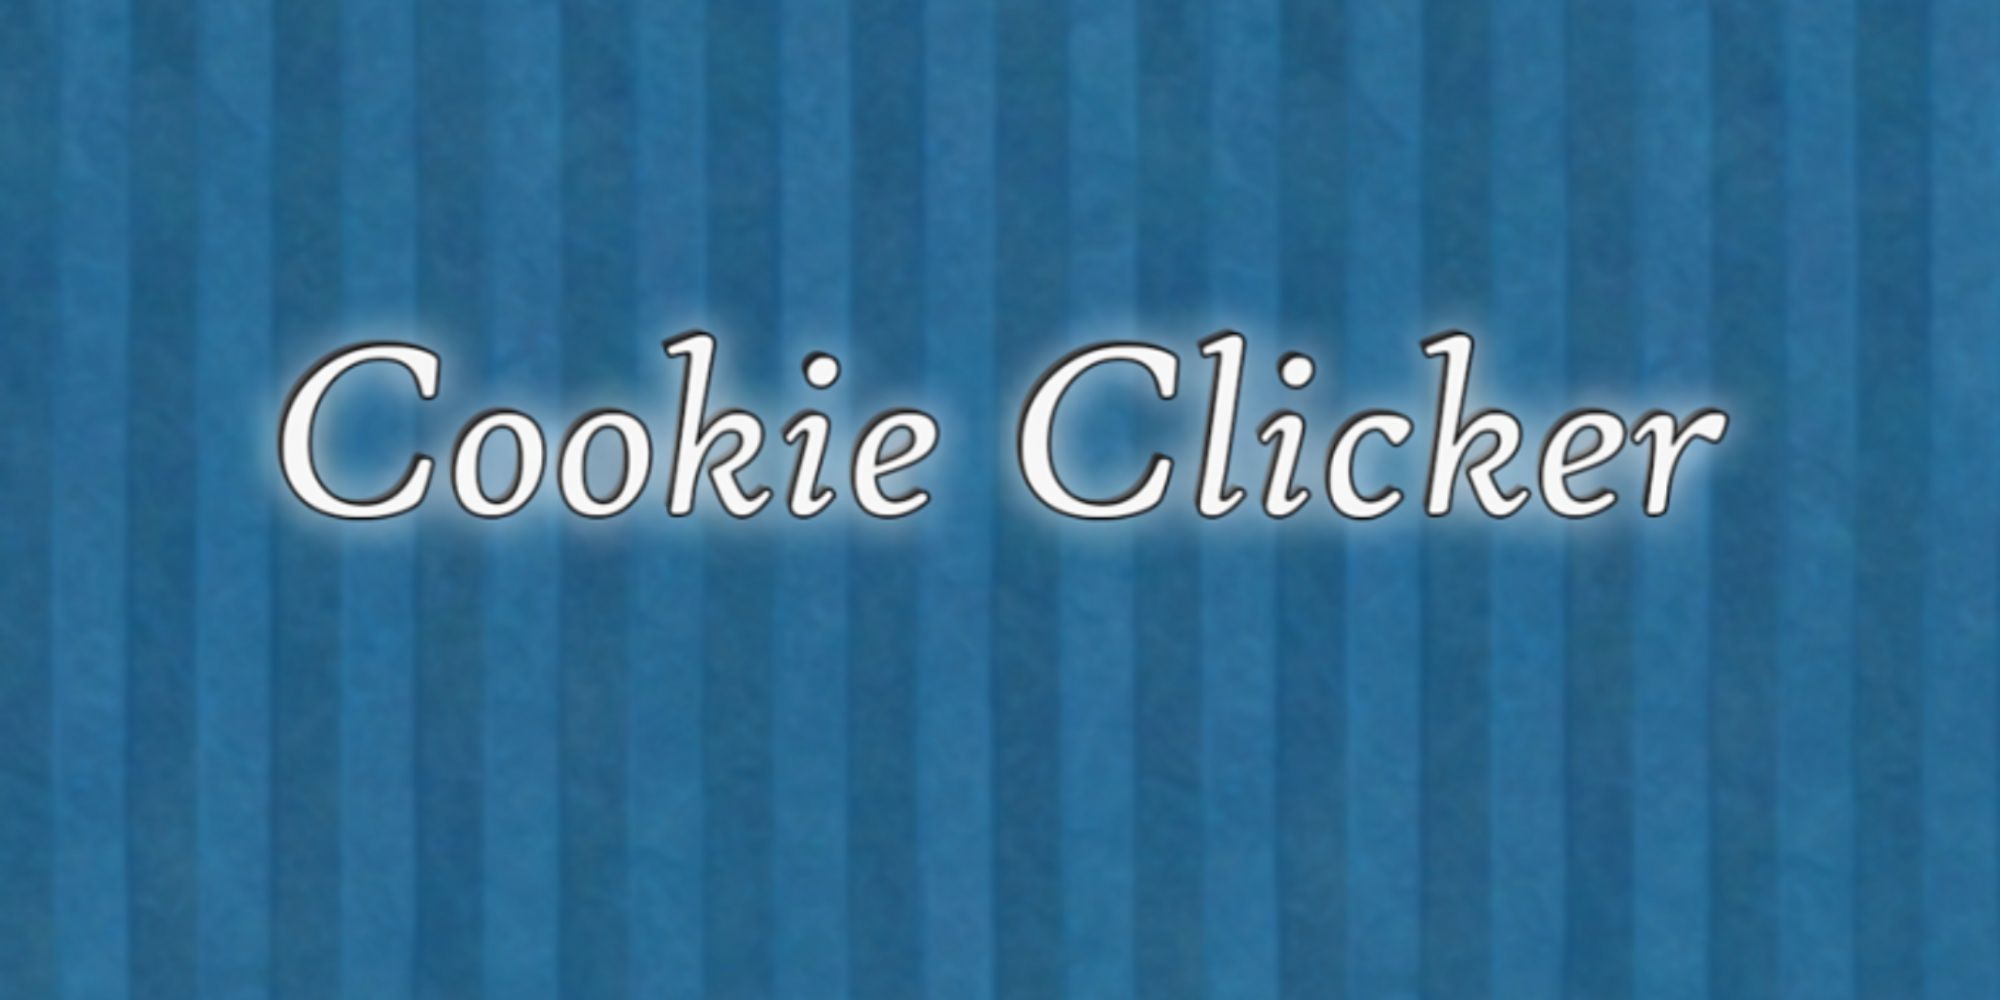 Roblox Cookie Clicker Codes (November 2023)